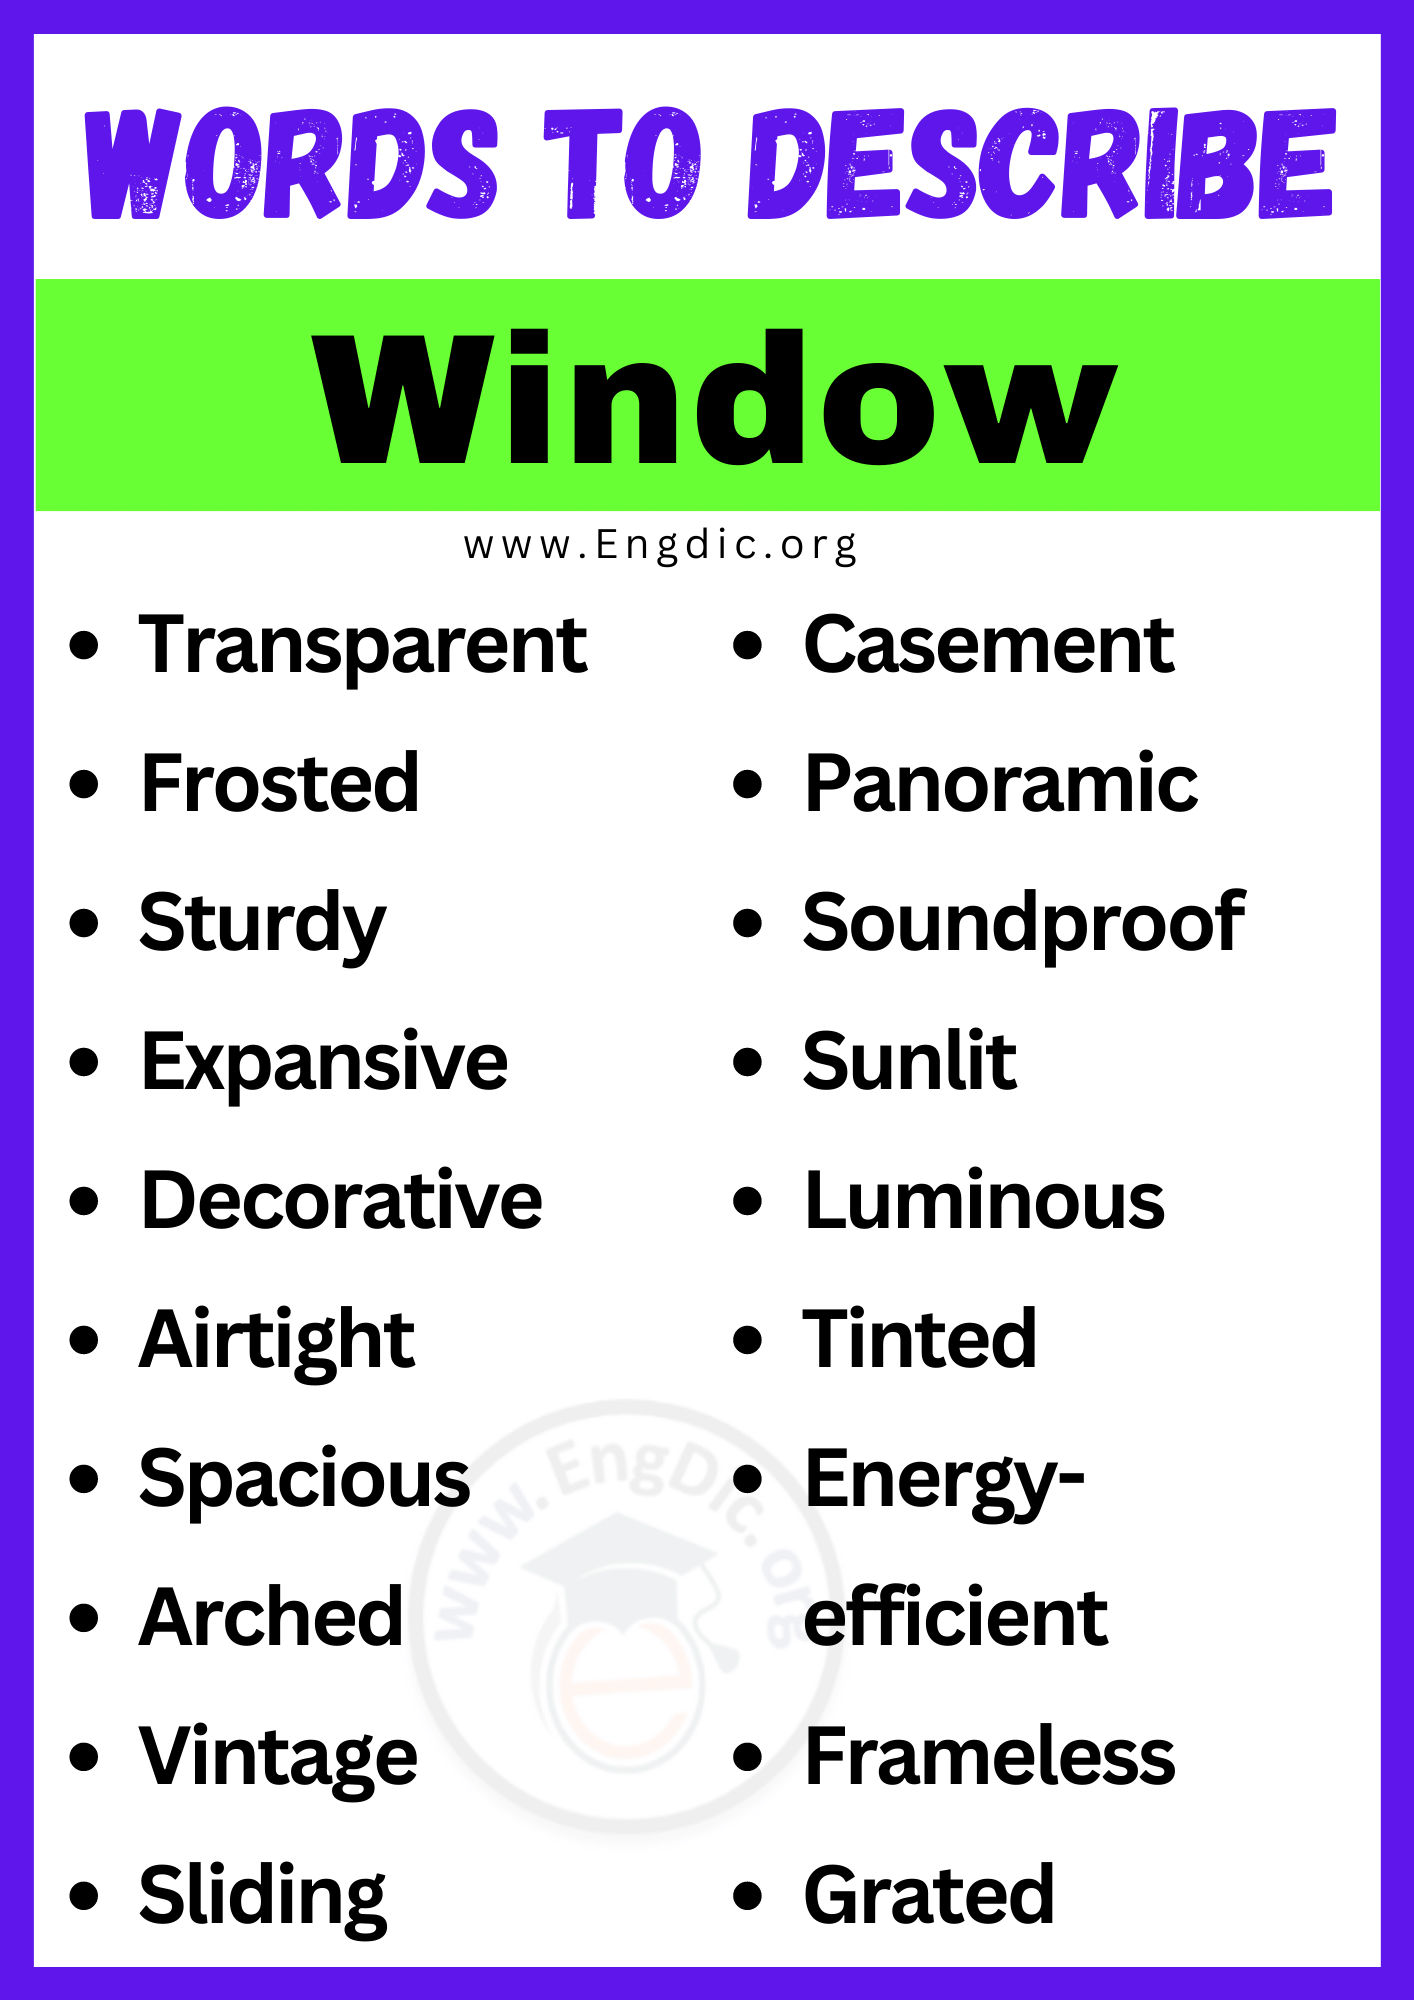 Words to Describe Window